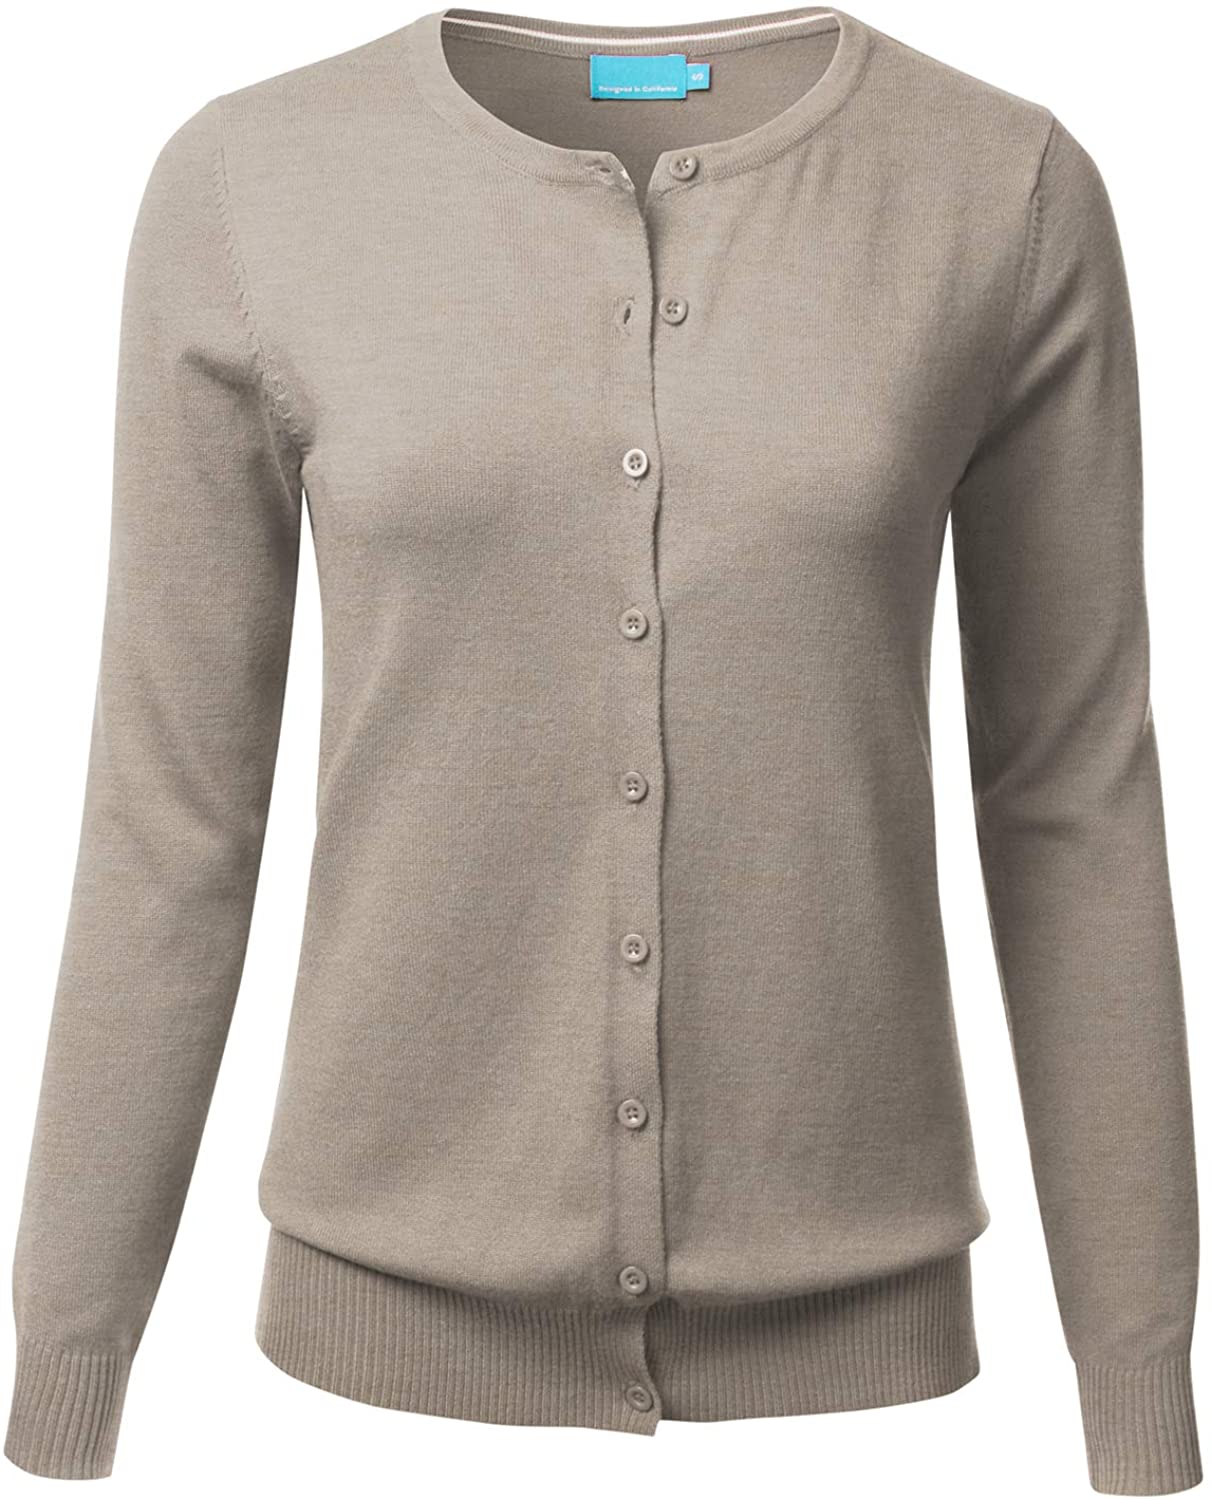 FLORIA Women's Button Down Crew Neck Long Sleeve Soft Knit Cardigan Sweater S-3X 